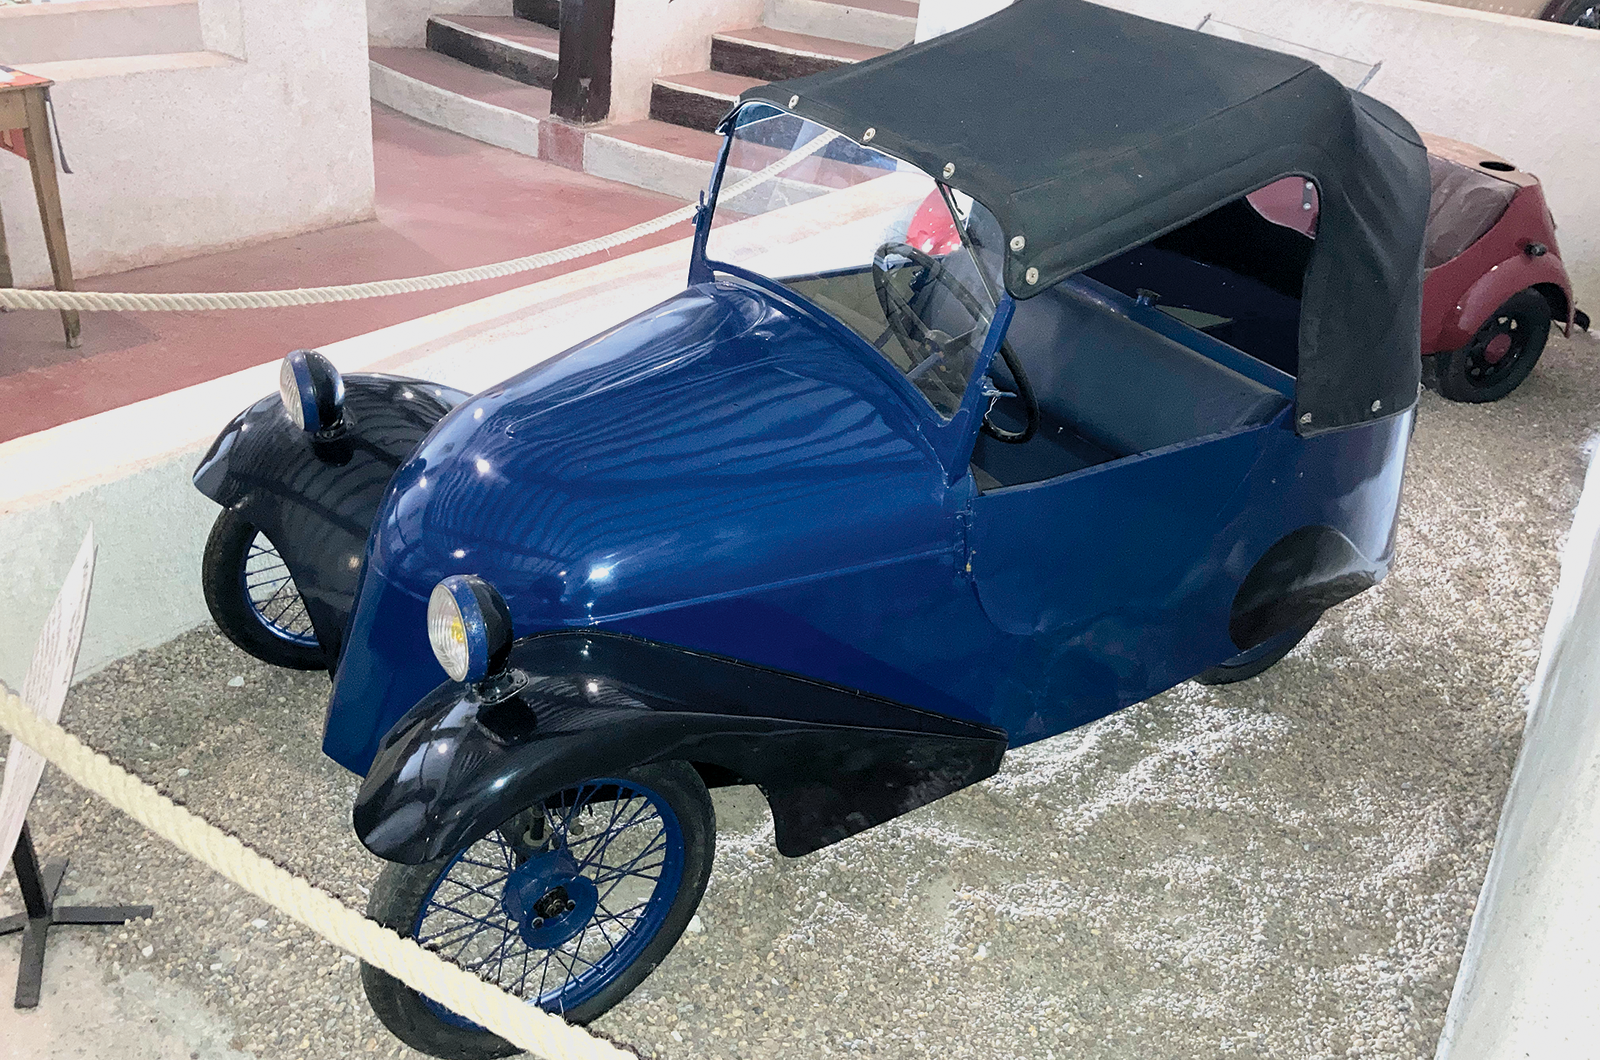 Classic & Sports Car – Classic shrine: Musée Maurice Dufresne